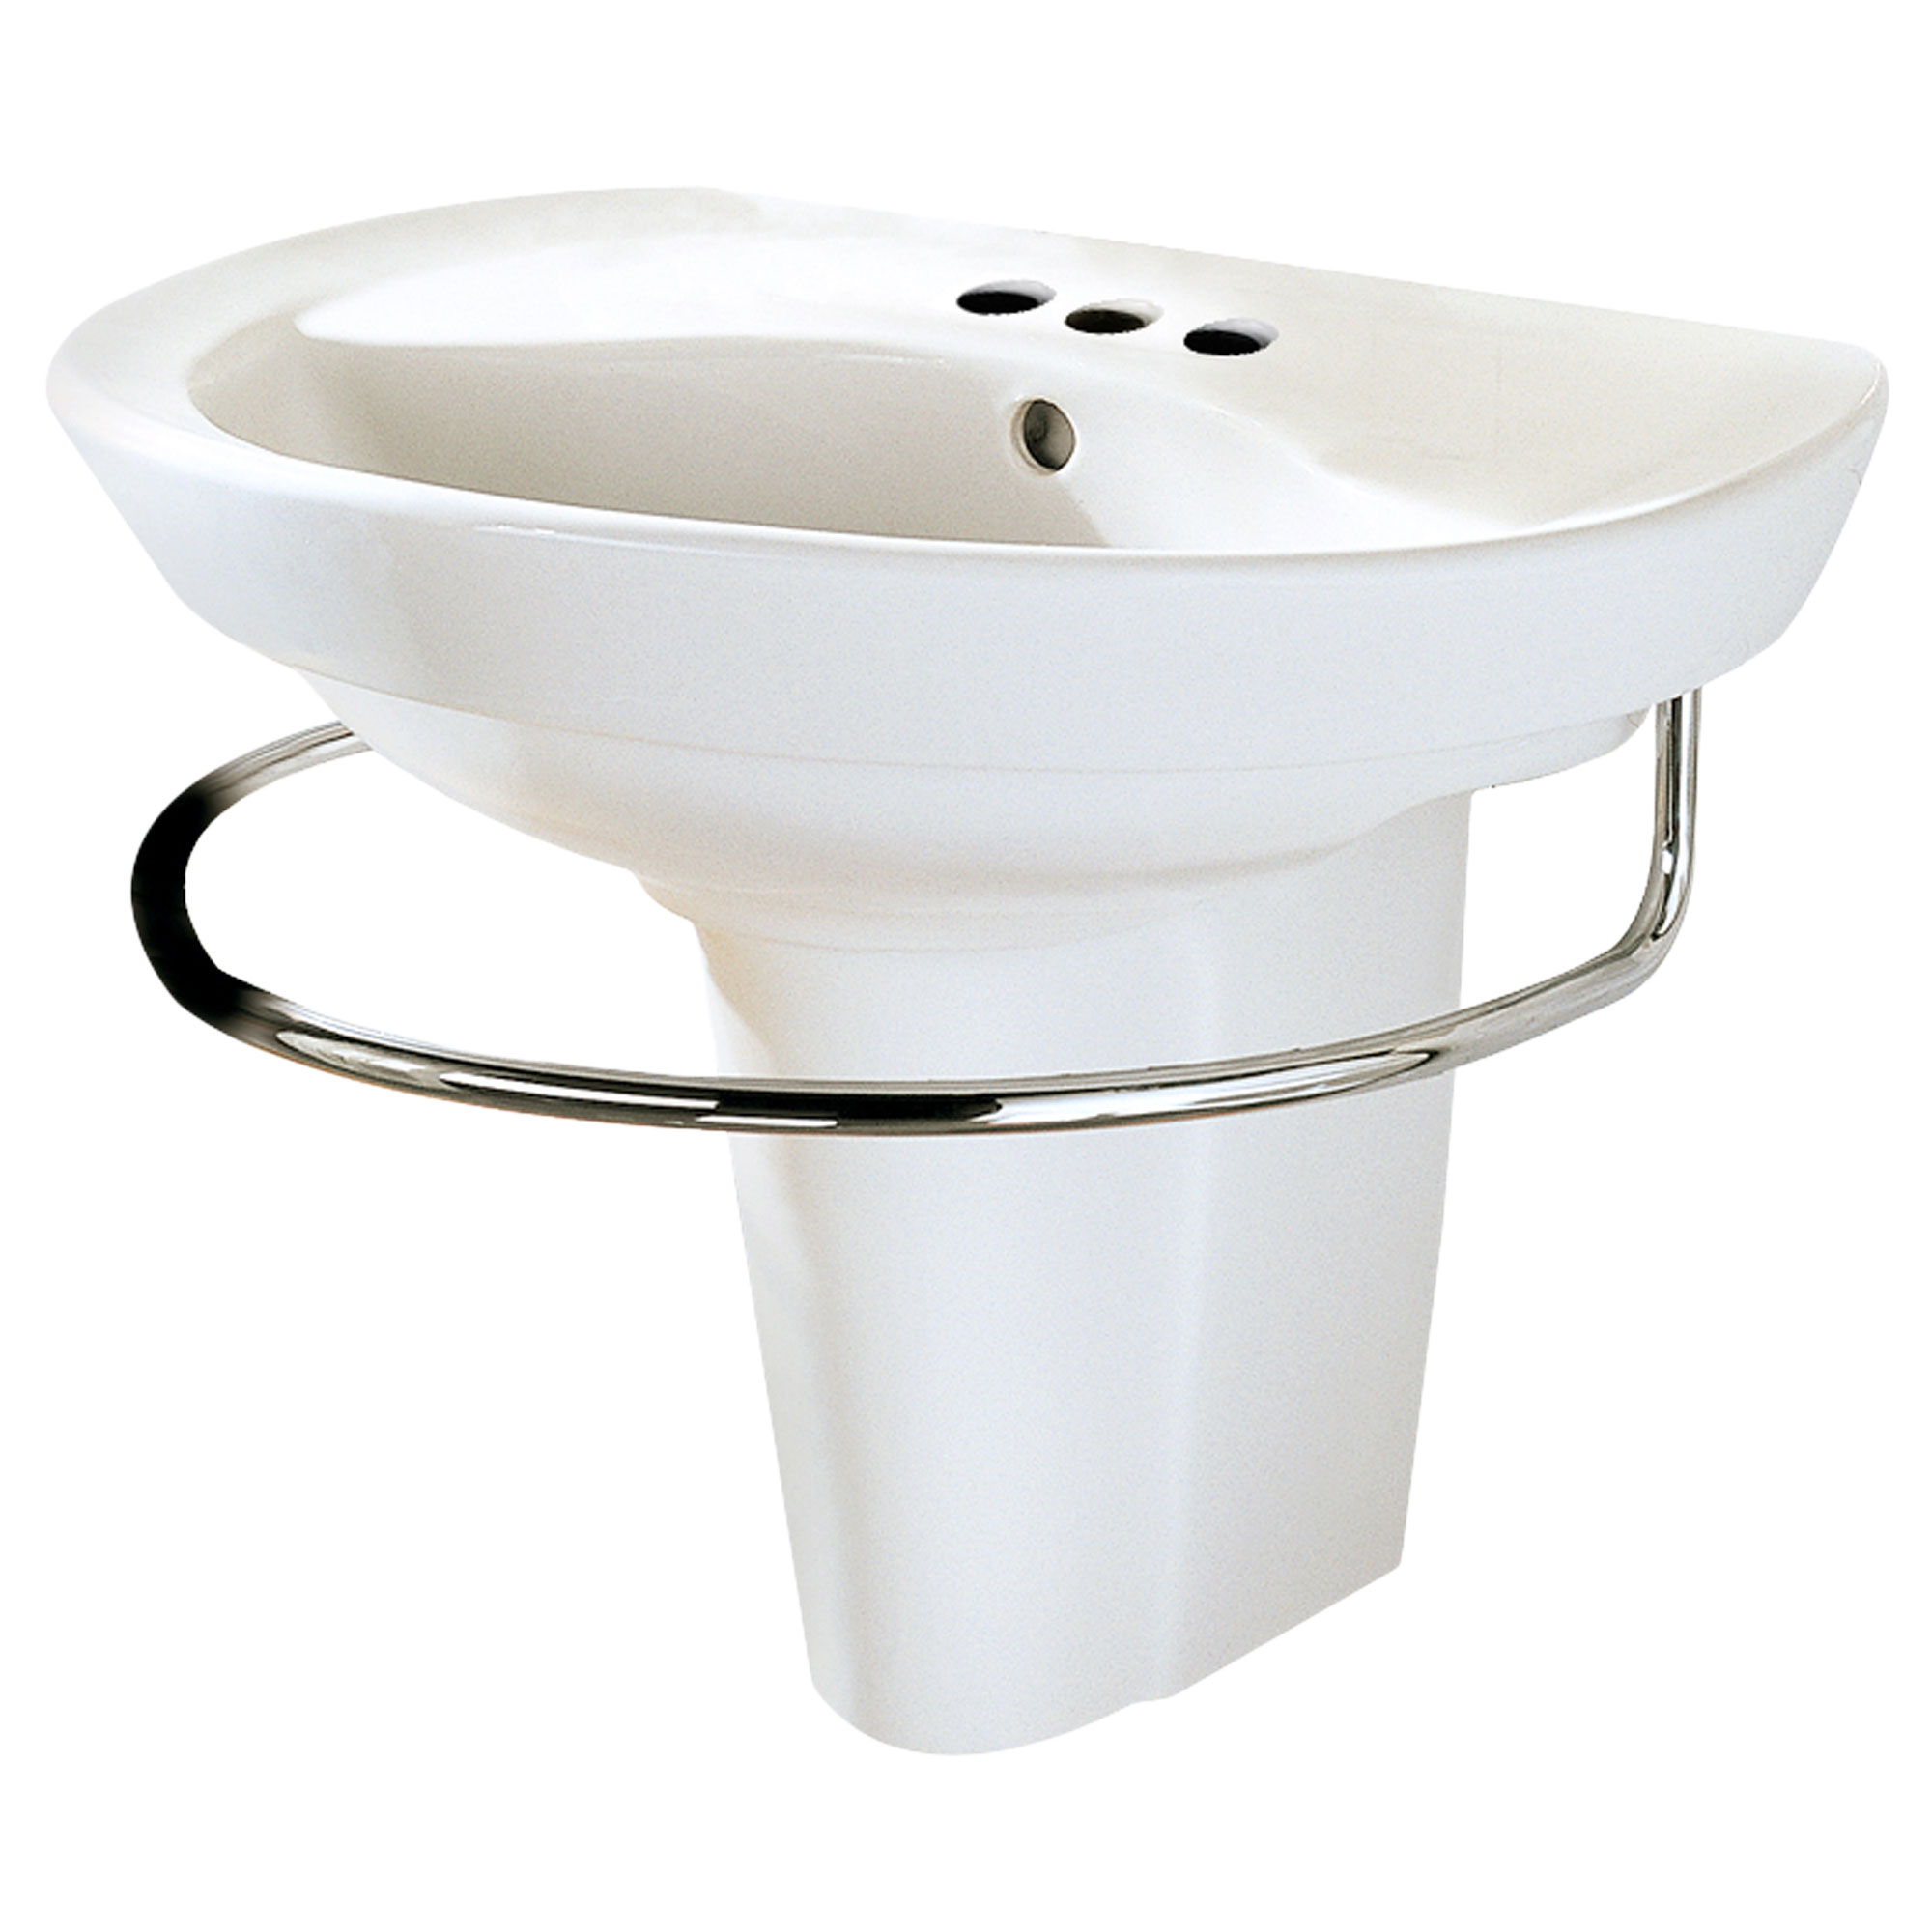 Ravenna™ 4-Inch Centerset Wall-Hung Sink and Semi-Pedestal Leg Combination